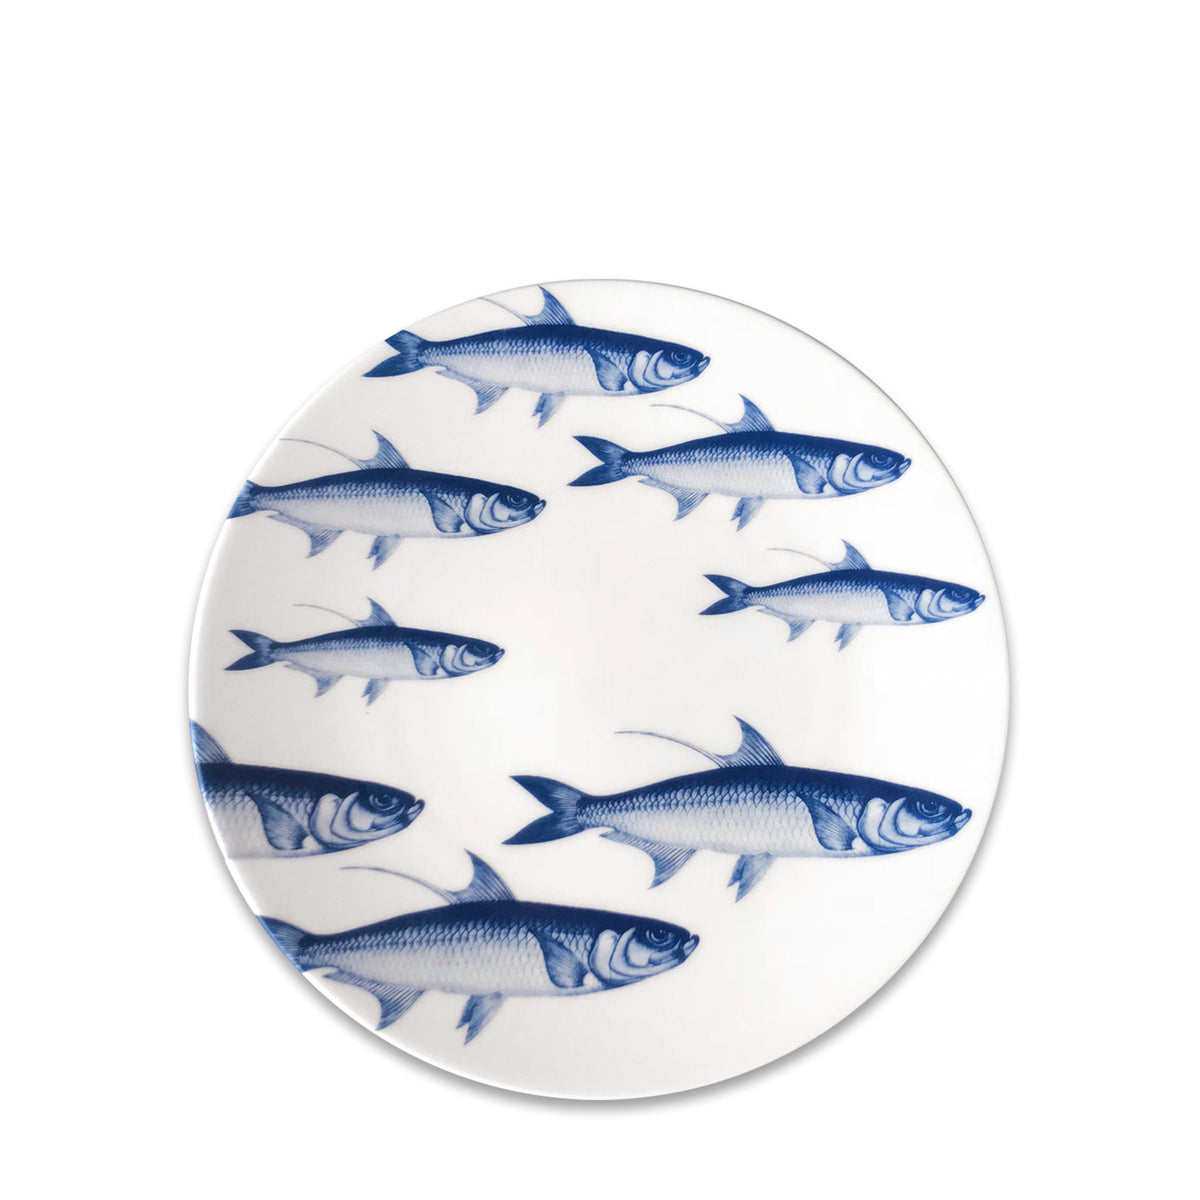 School of Fish Coupe Salad Plate - Caskata